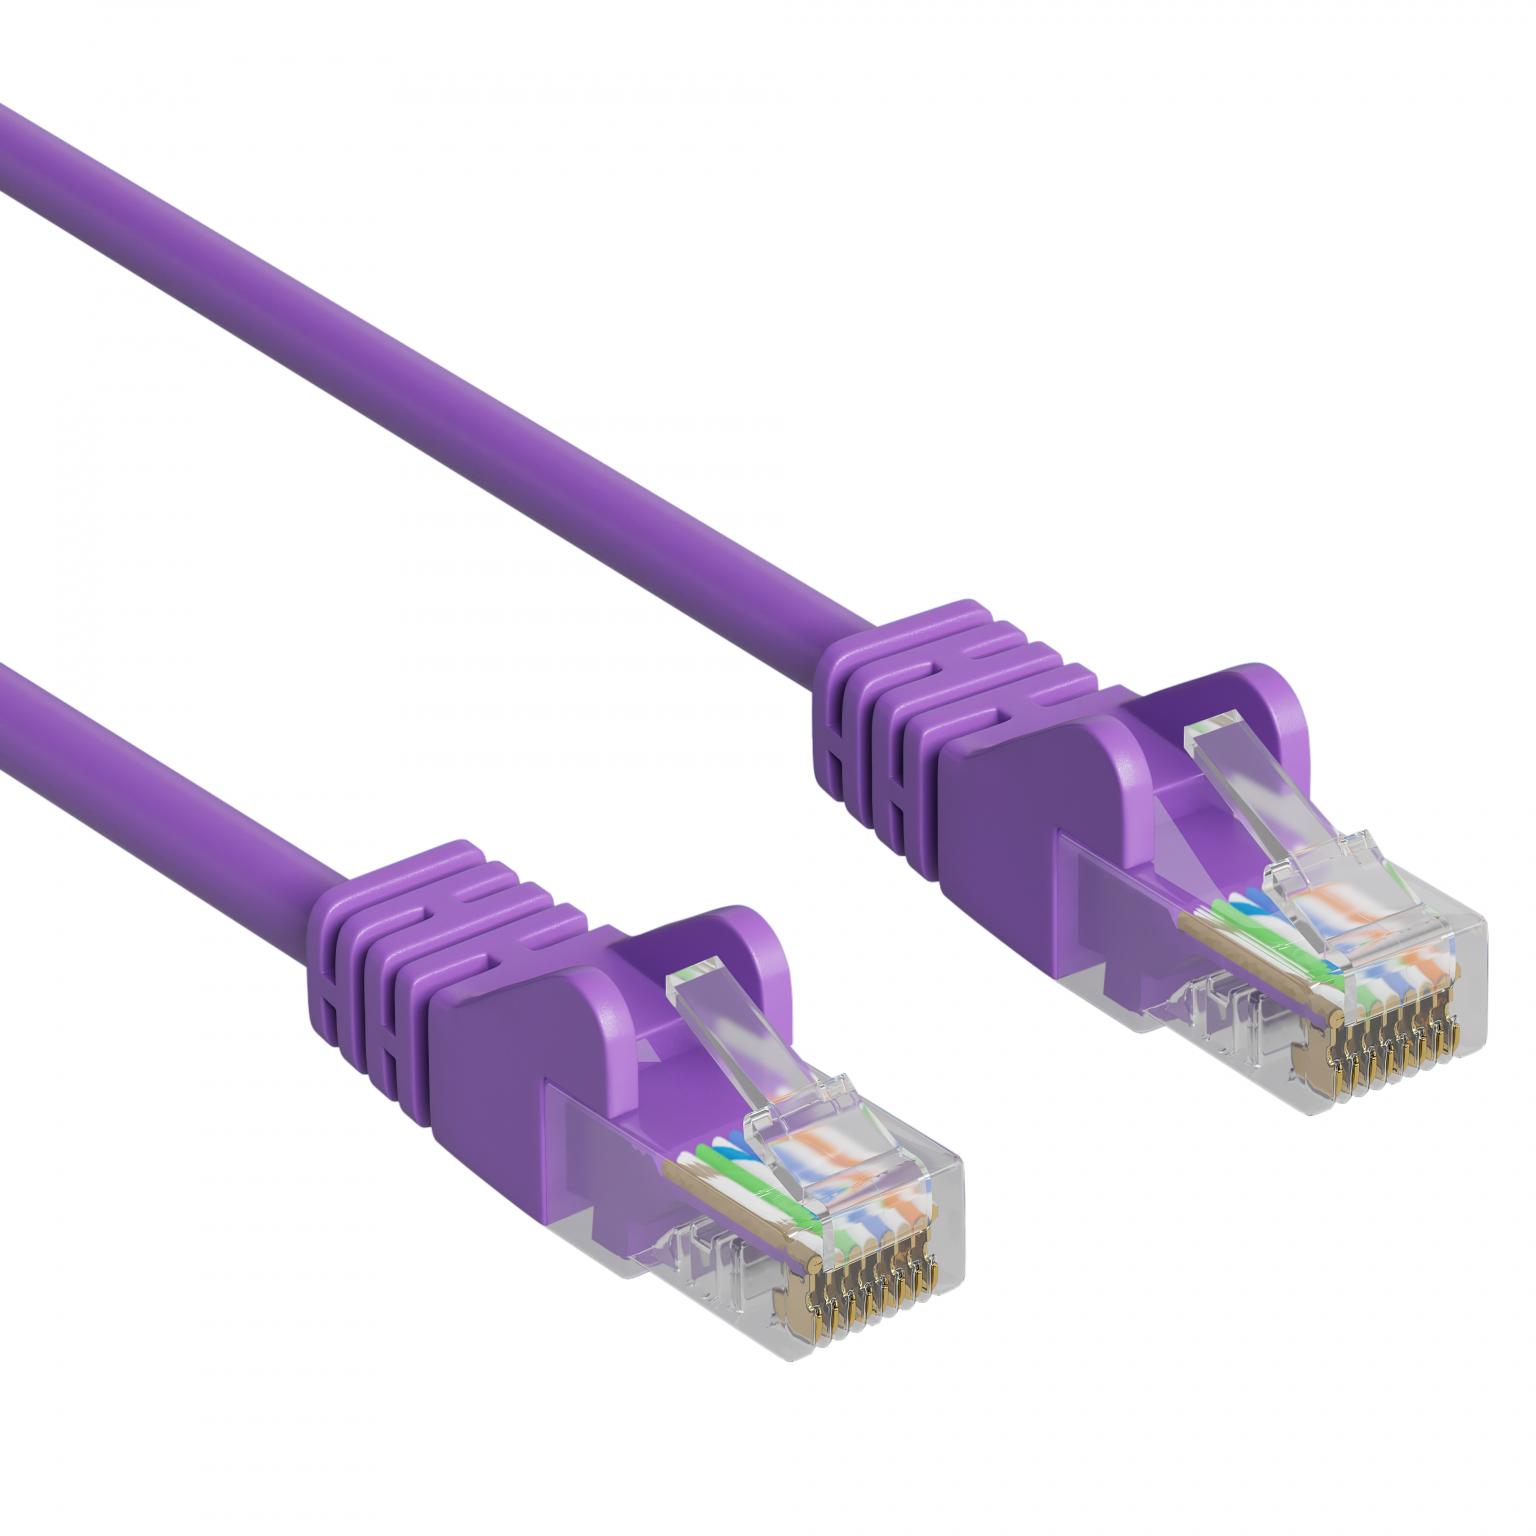 Netwerkkabel CAT 5e - U/UTP - Netwerkkabel - paars, Type: CAT 5e - PVC, Aansluiting 1: RJ45 male, Aansluiting 2: RJ45 male, Aders: CCA - AWG 26/7, 0.5 meter